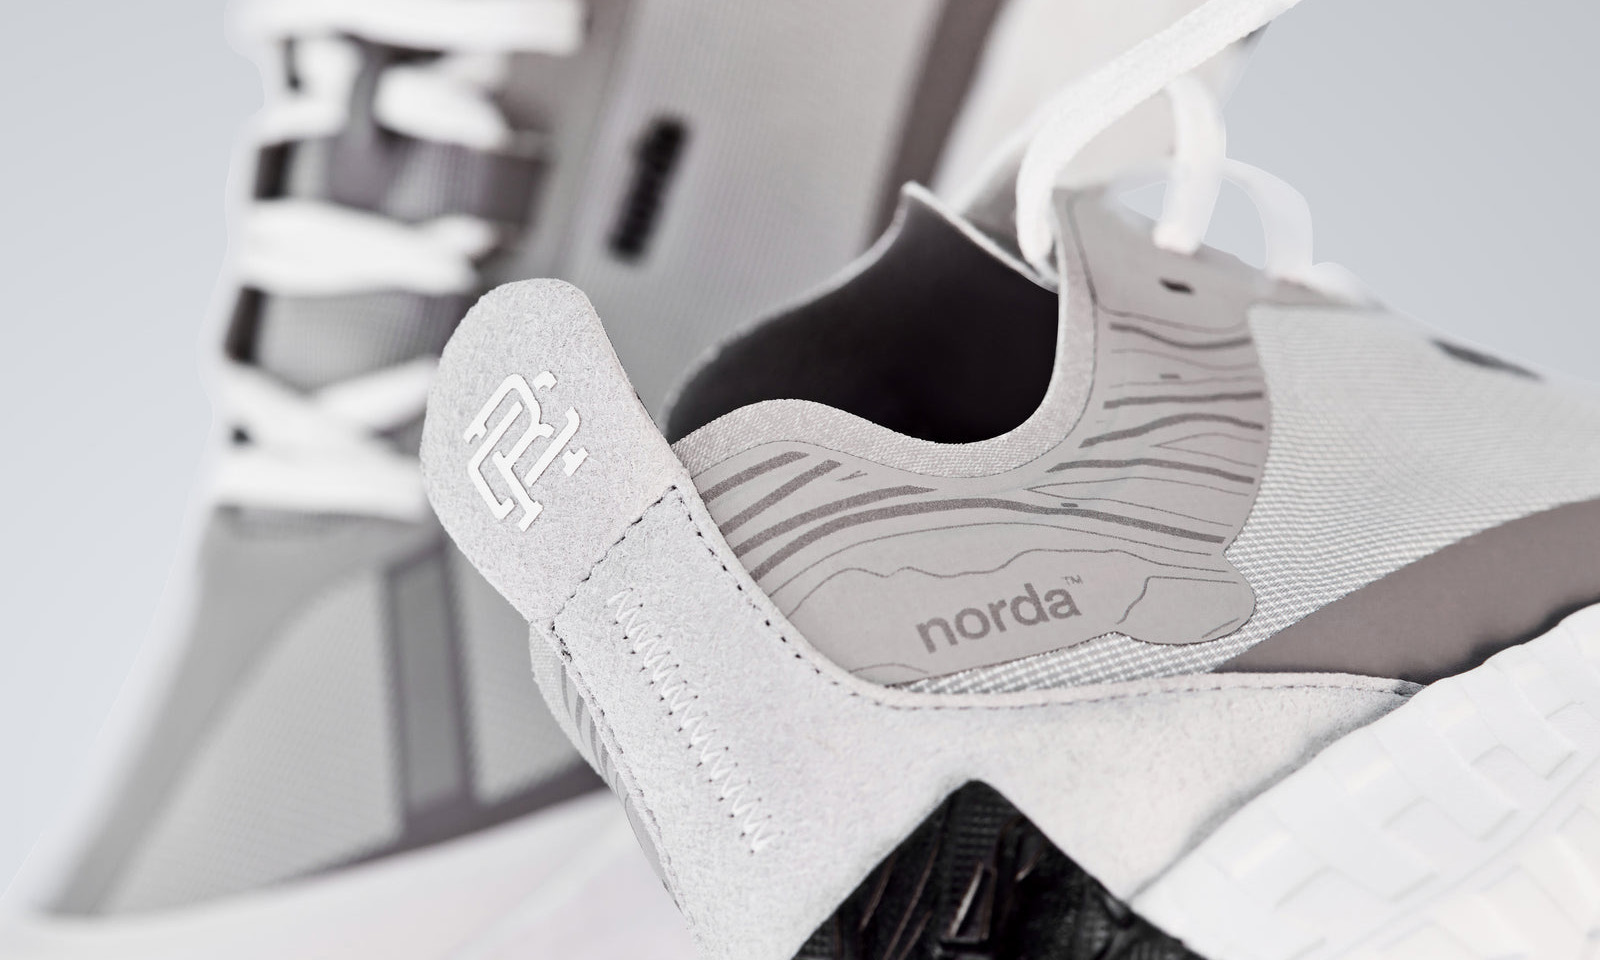 norda™ 携手 Reigning Champ 打造 001 联名鞋款